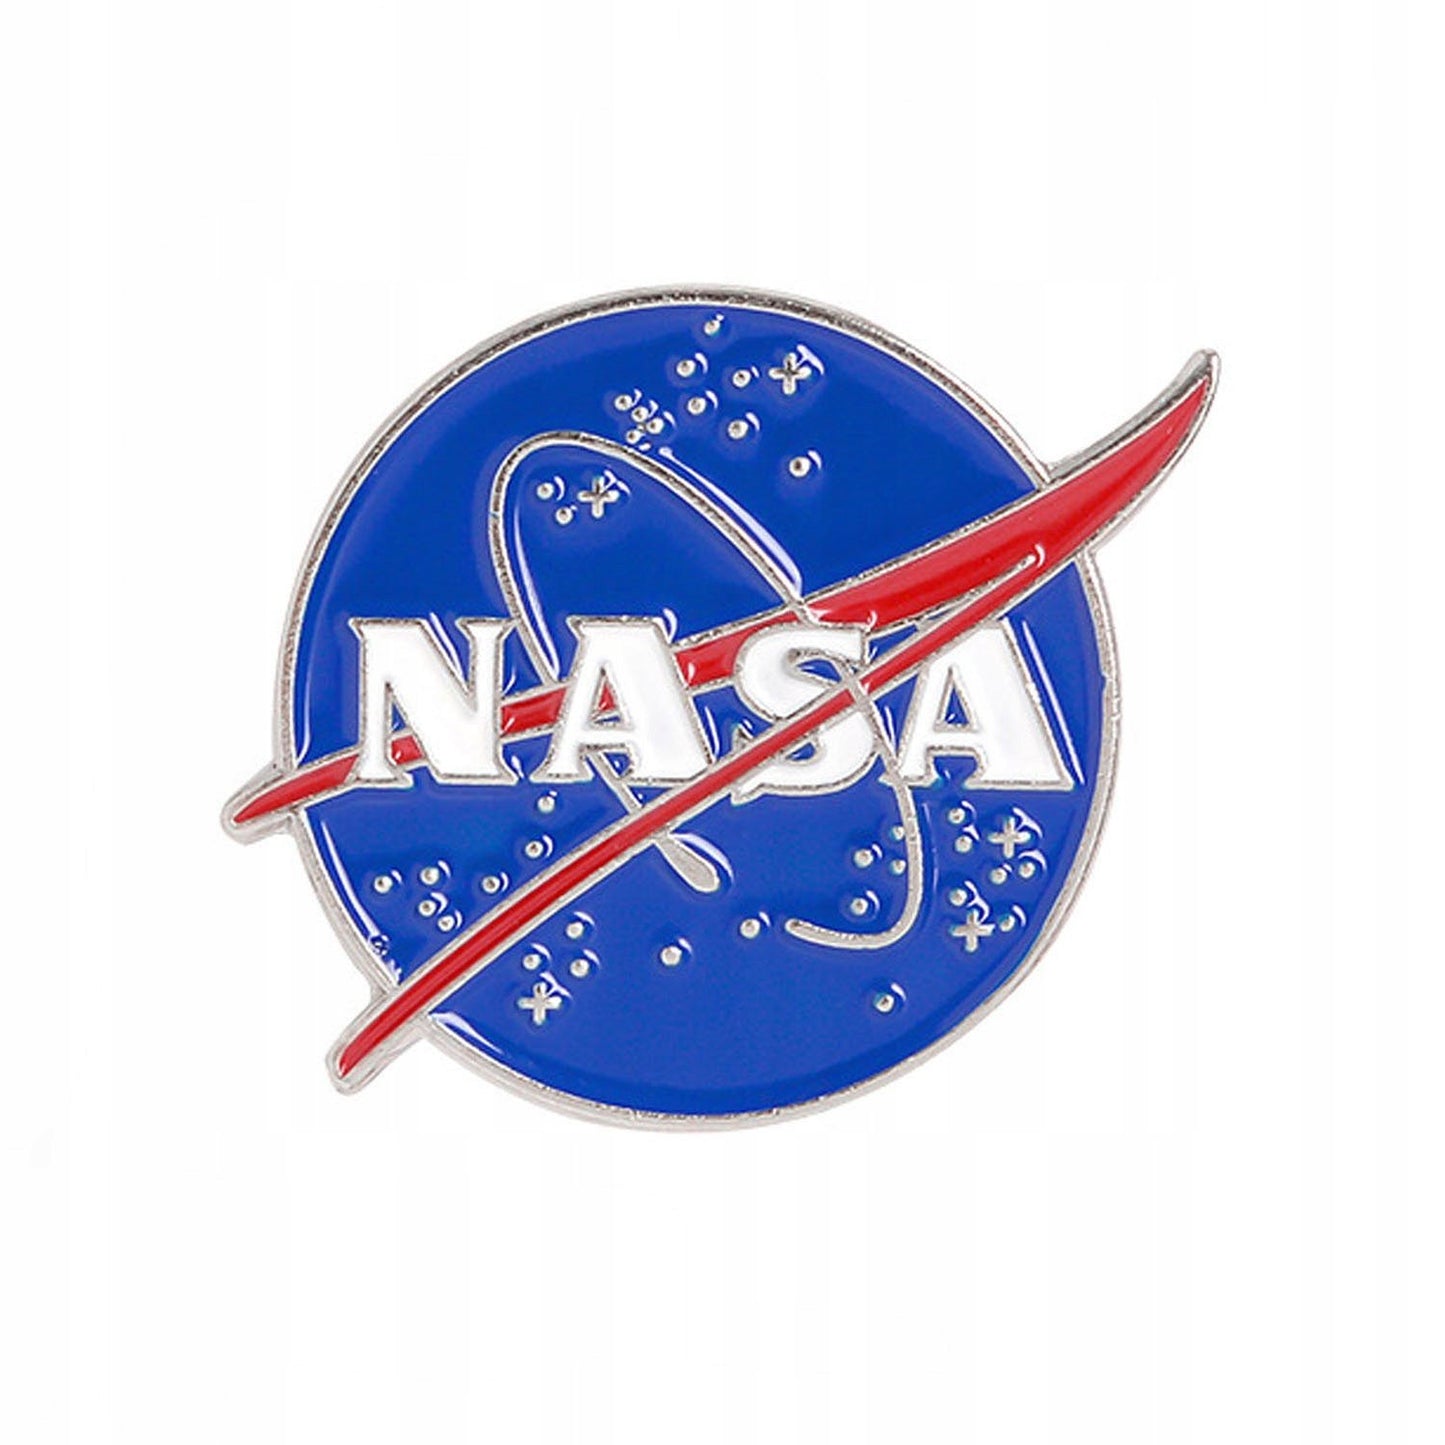 NASA logo emaliowana przypinka - Pinets Polska